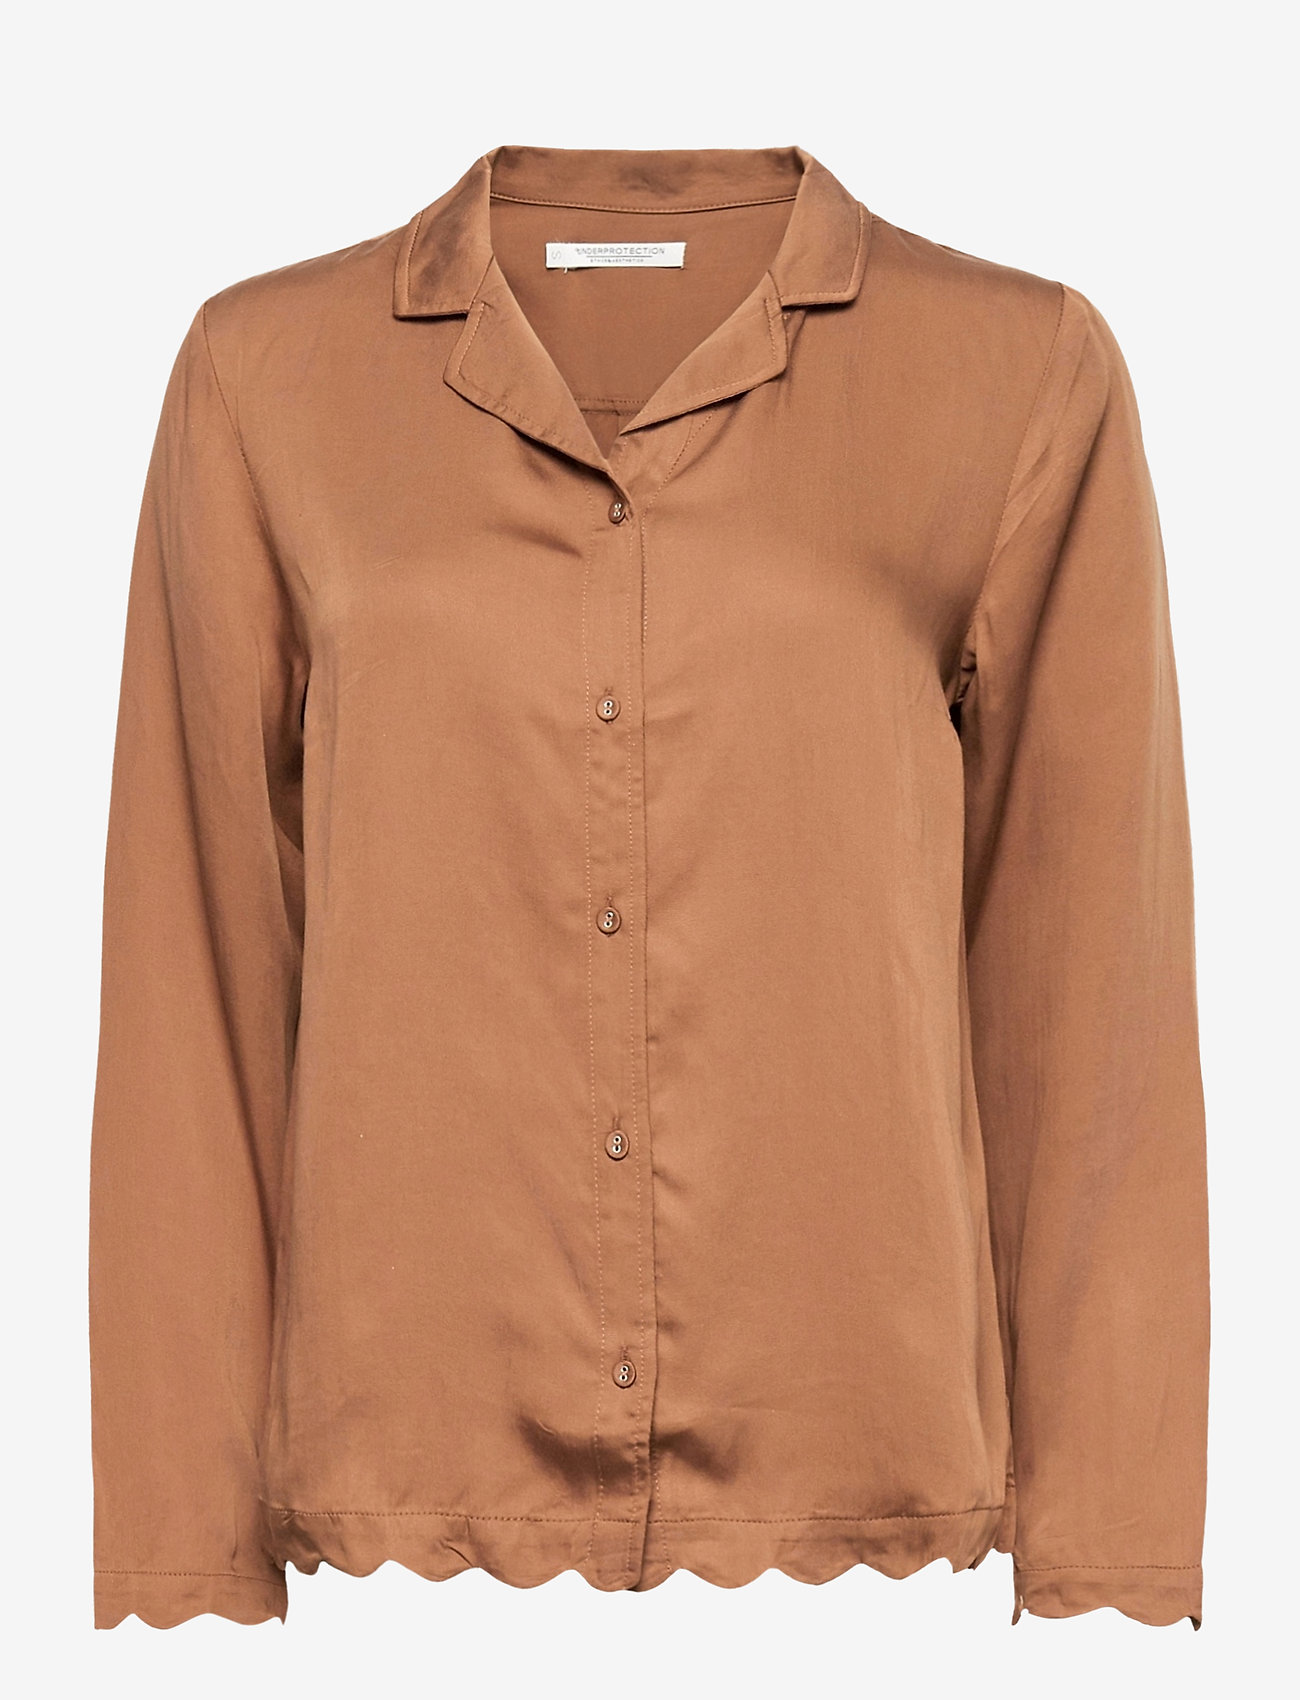 Underprotection - jane shirt - oberteile - brown - 0